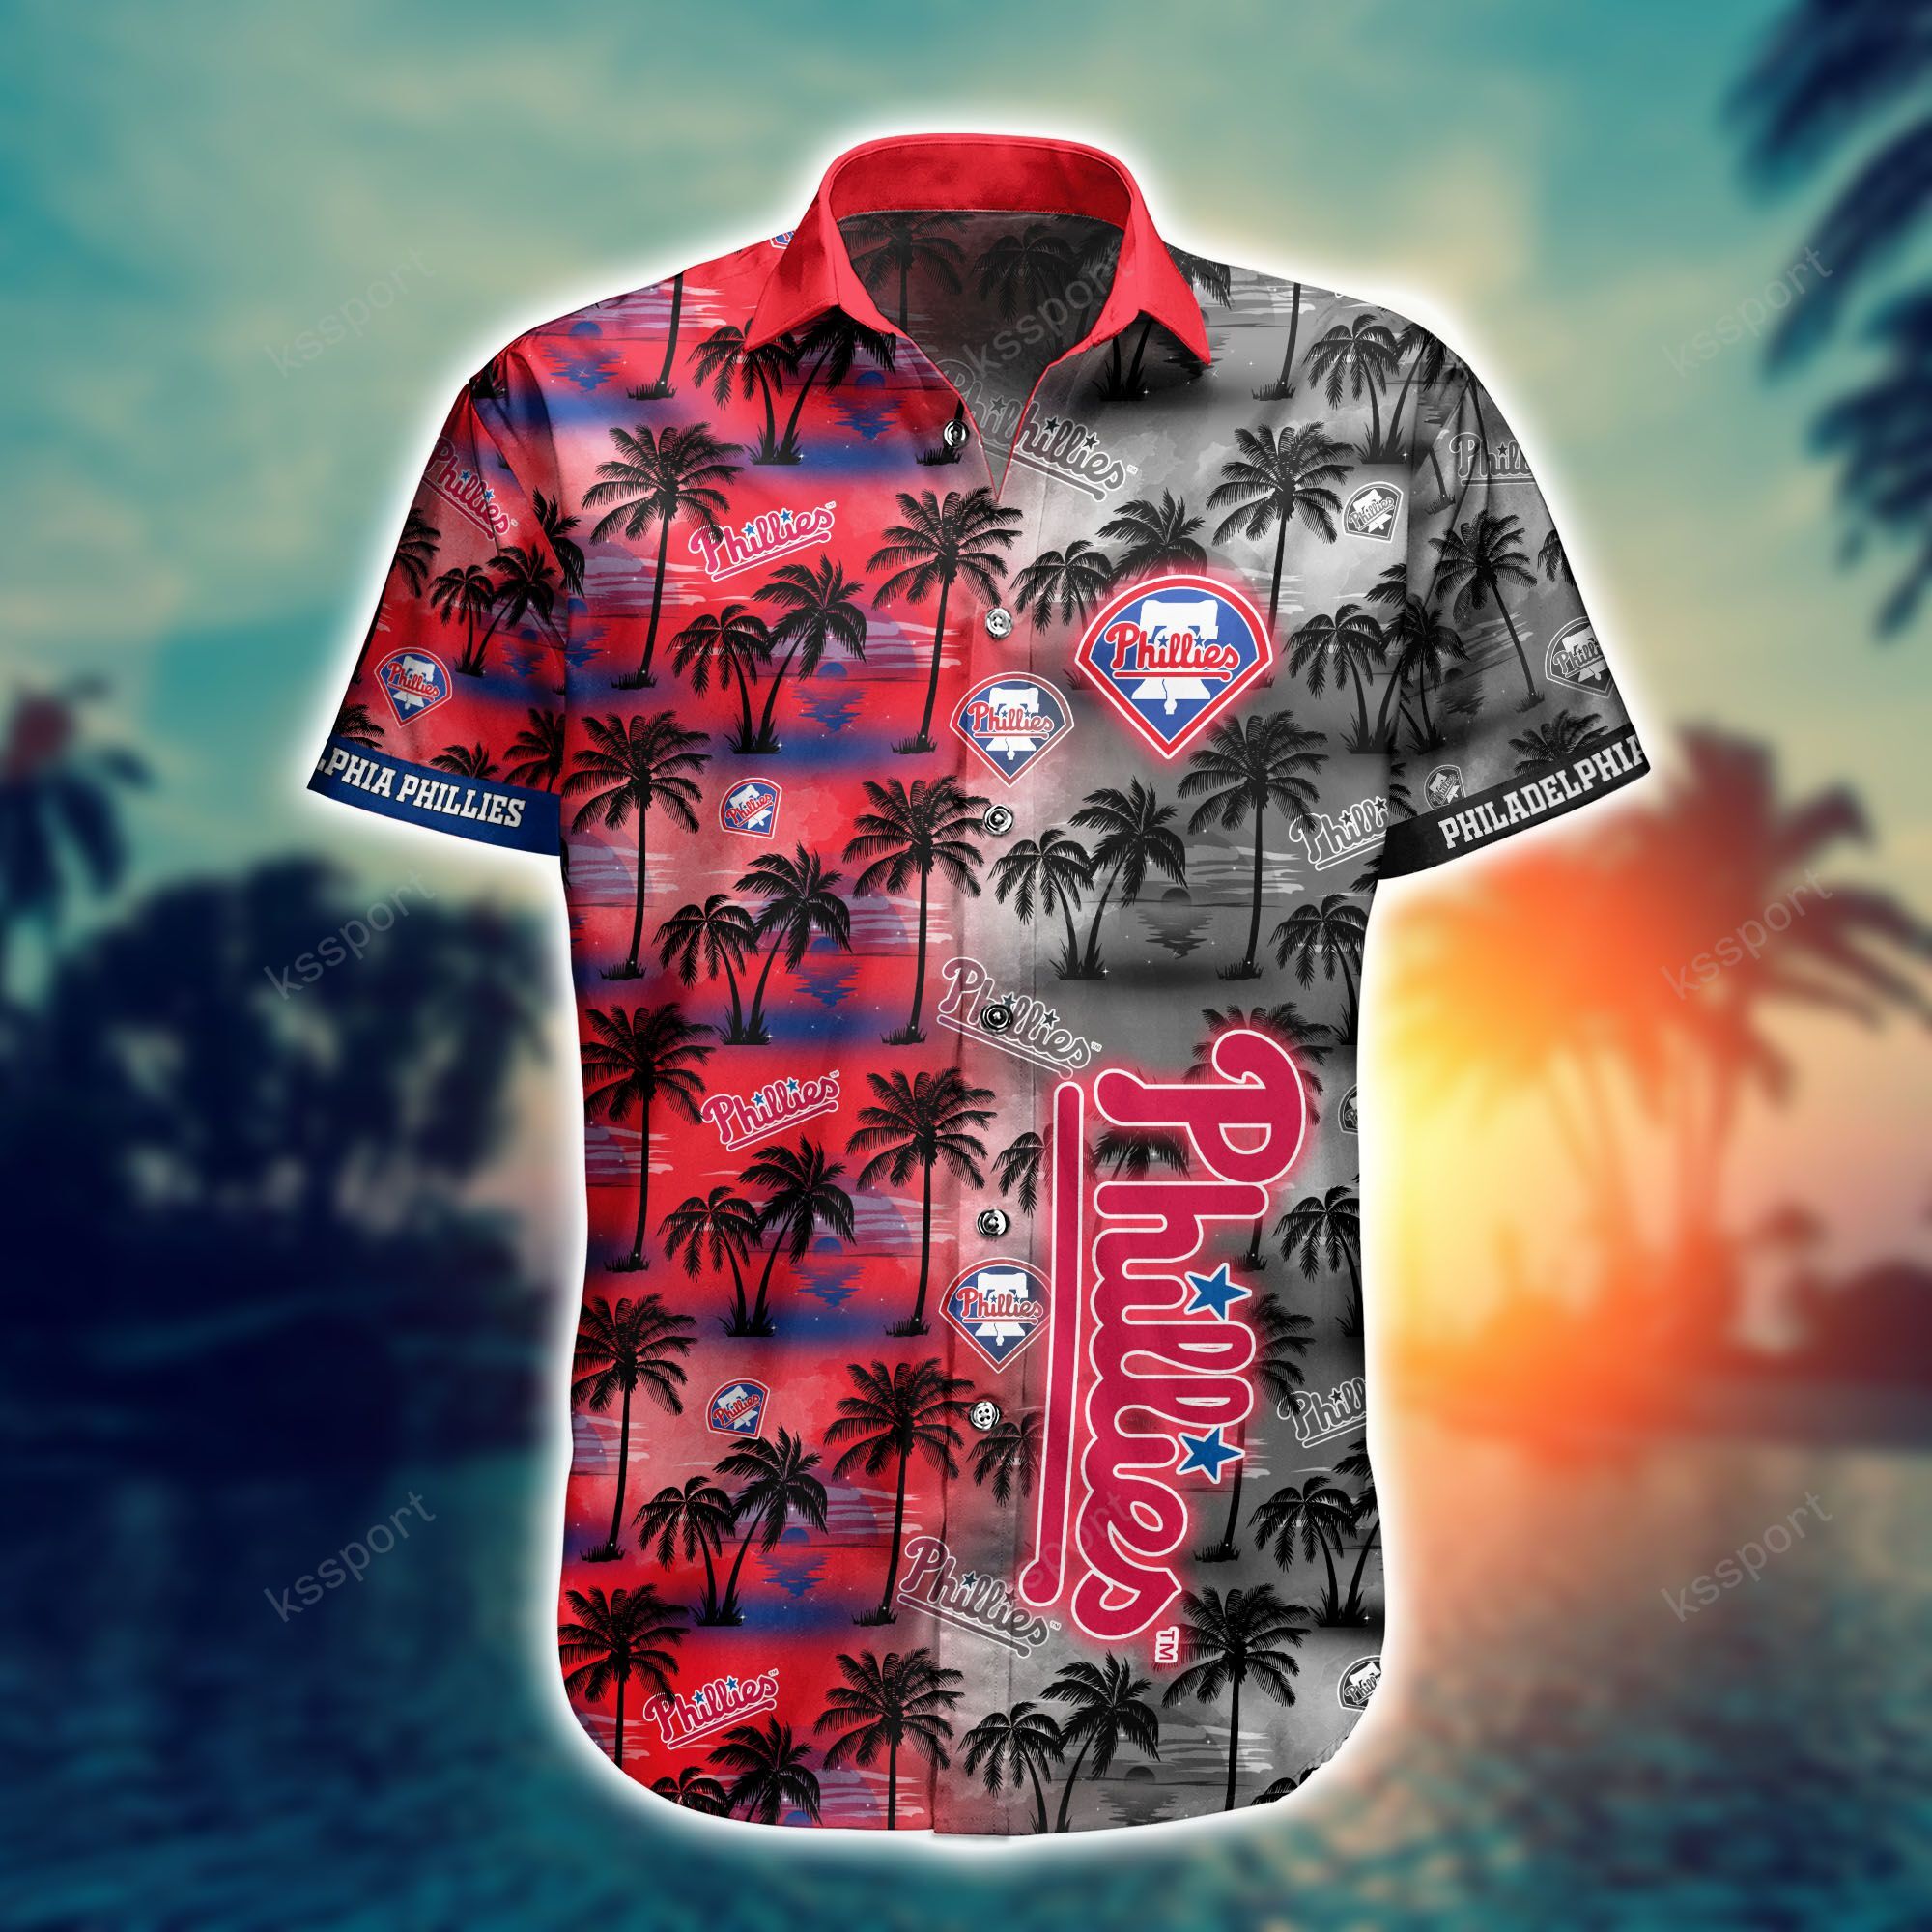 Hawaiian shirt and shorts is a great way to look stylish at a beach party 43